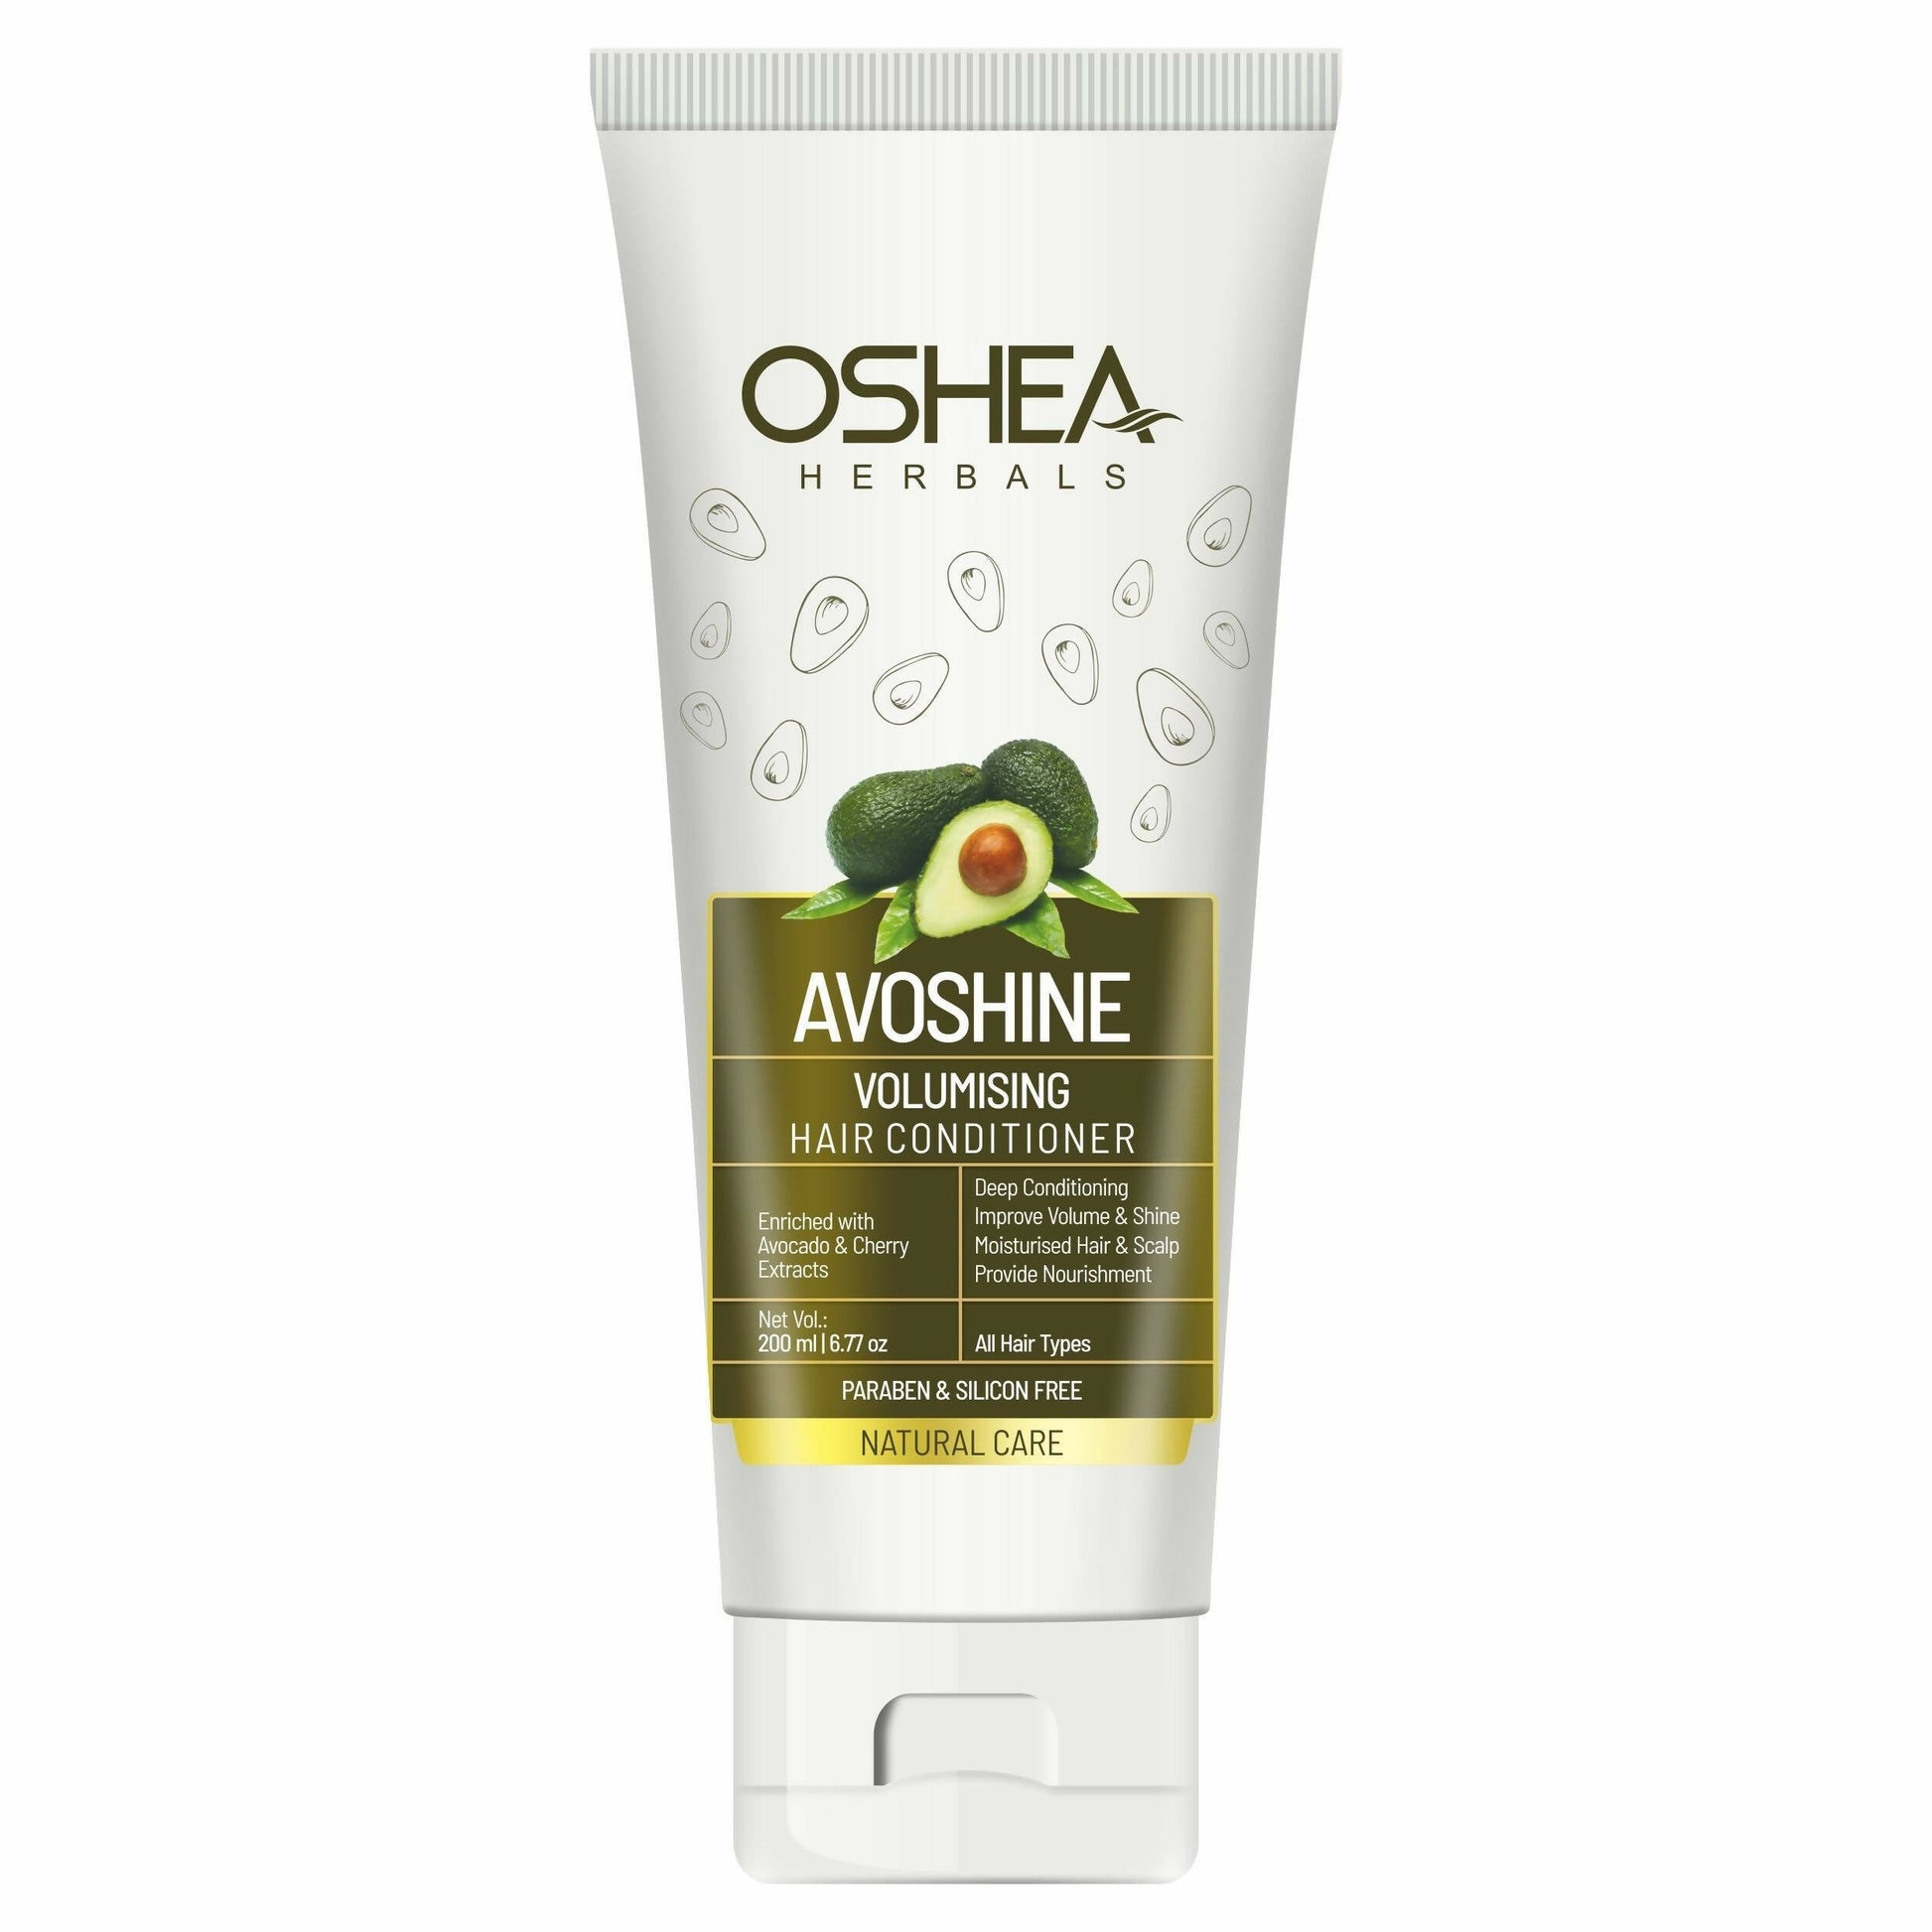 Oshea Herbals Avoshine Hair Conditioner - buy-in-usa-australia-canada